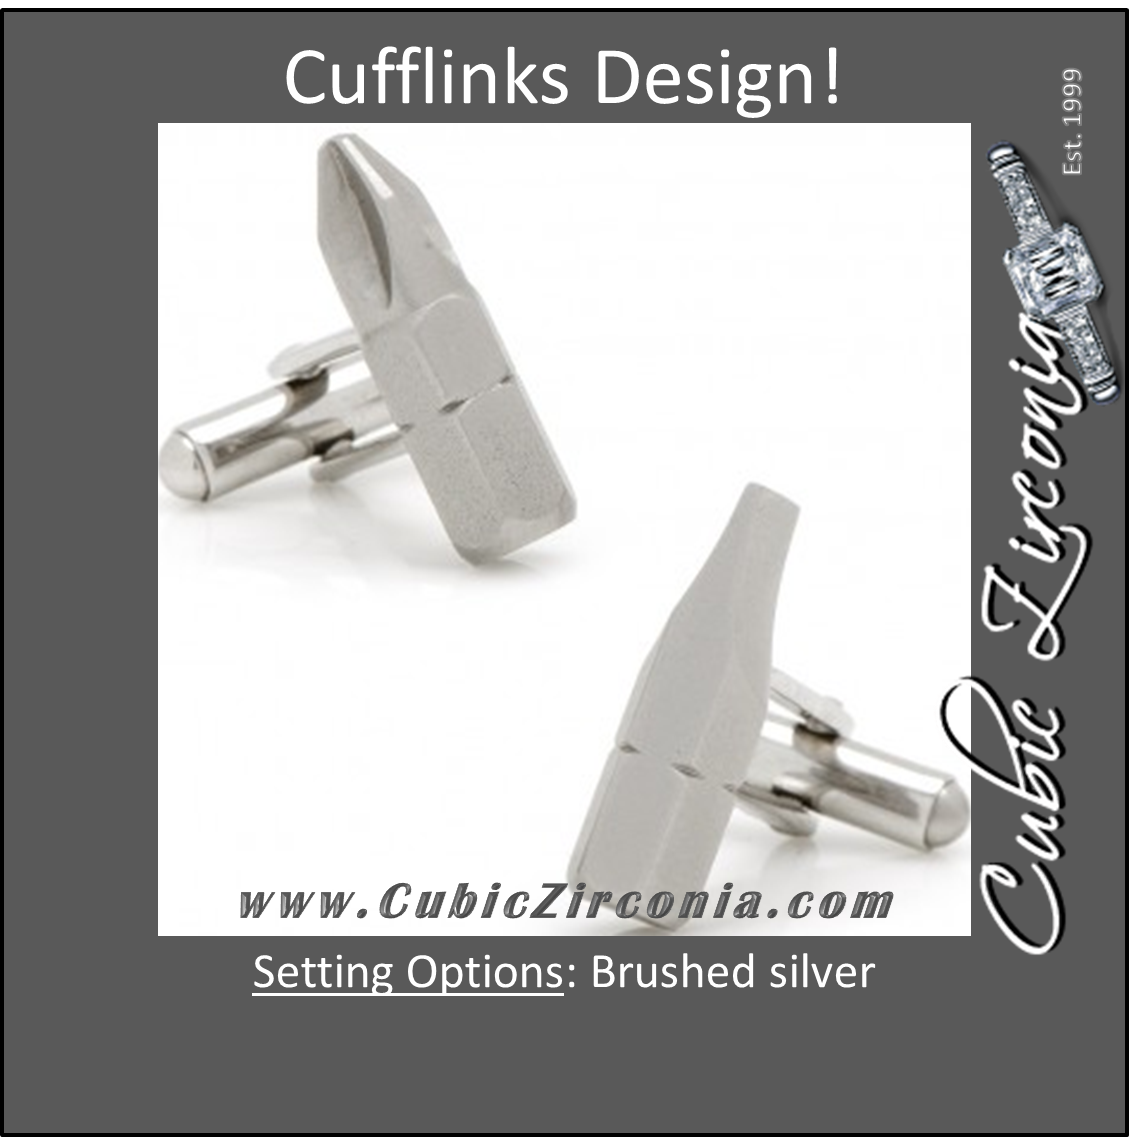 Men’s Cufflinks- Phillips and Flathead Screwdriver Bits (Functional)